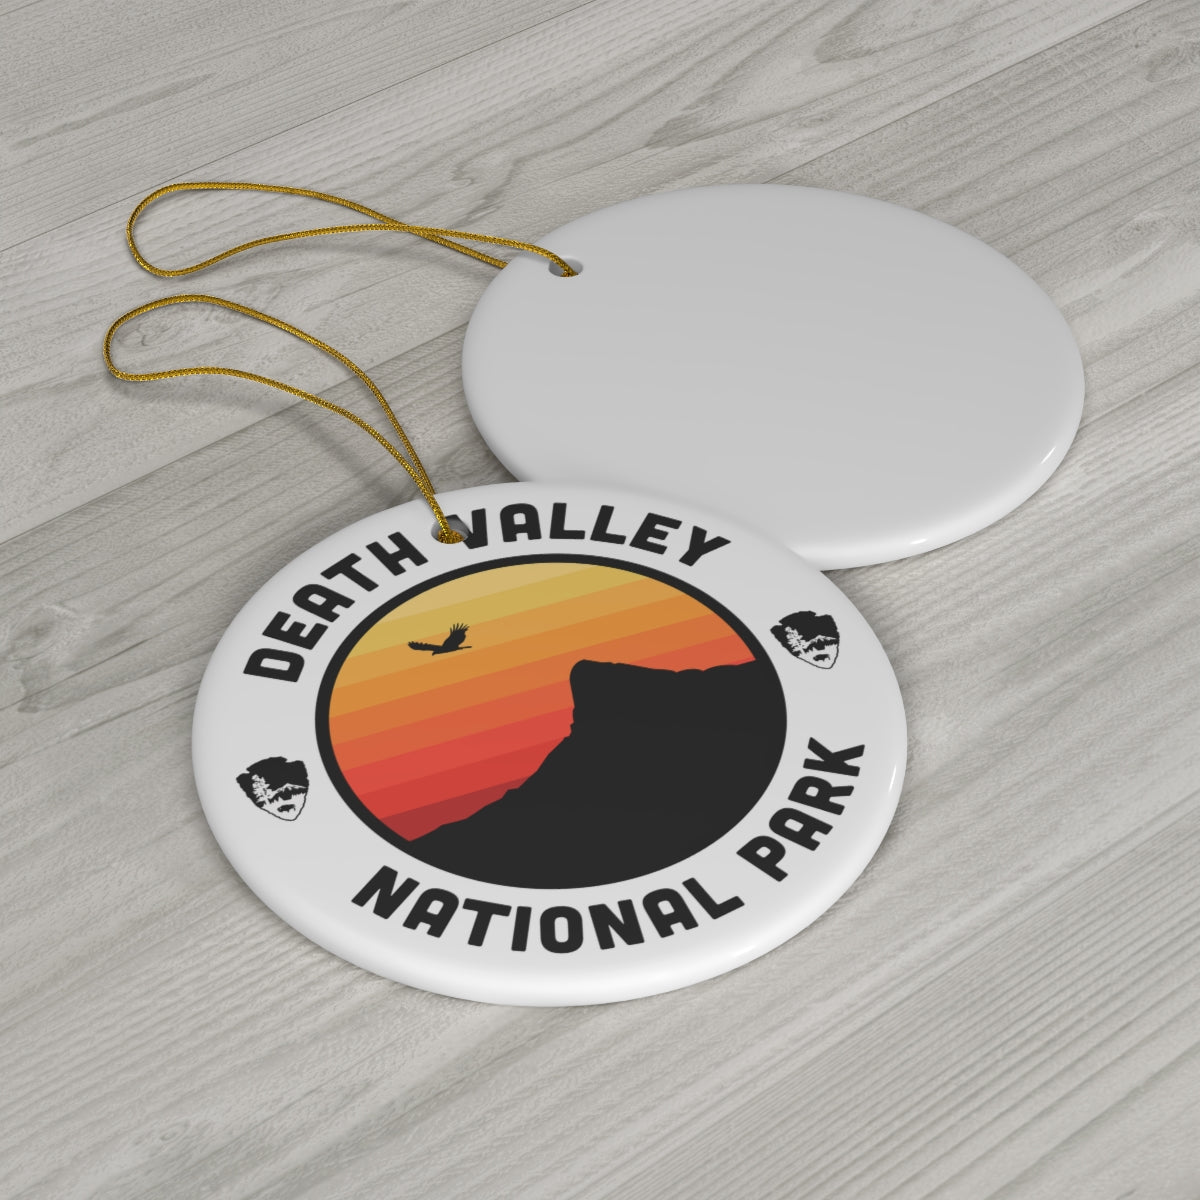 Death Valley National Park Ornament - Round Emblem Design